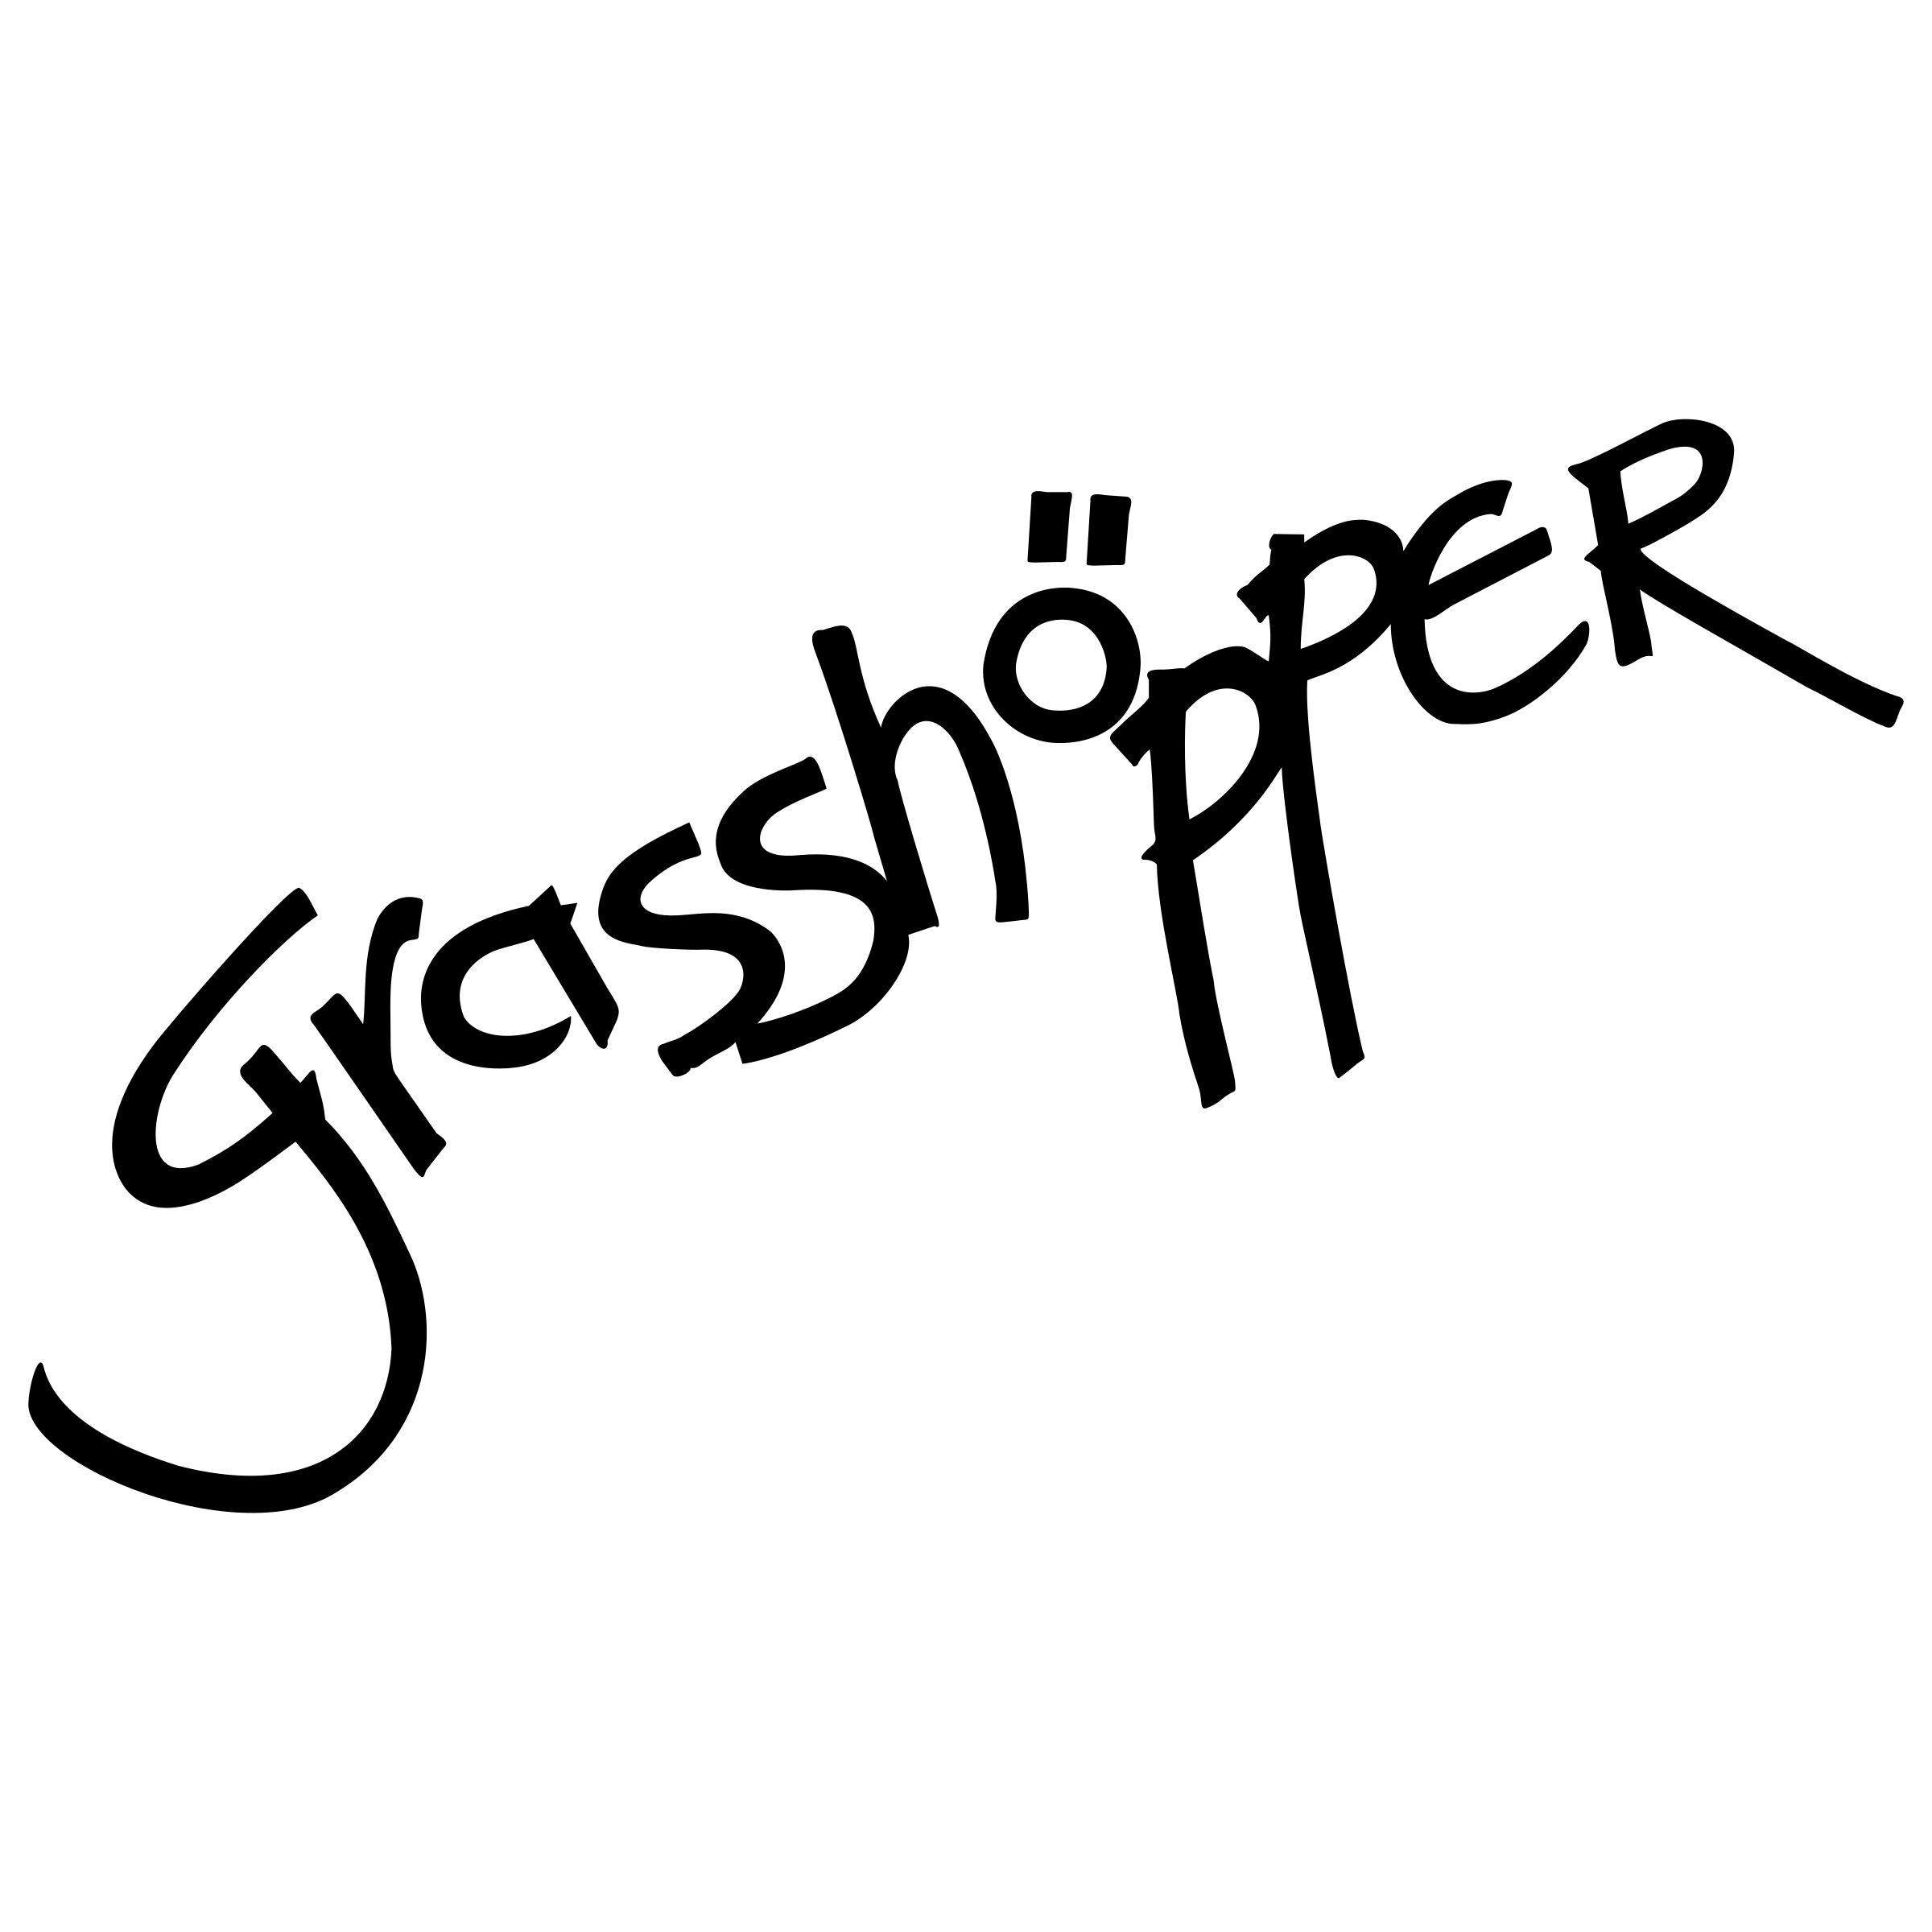 Grasshopper Logo - Grasshopper Logo PNG Transparent & SVG Vector - Freebie Supply